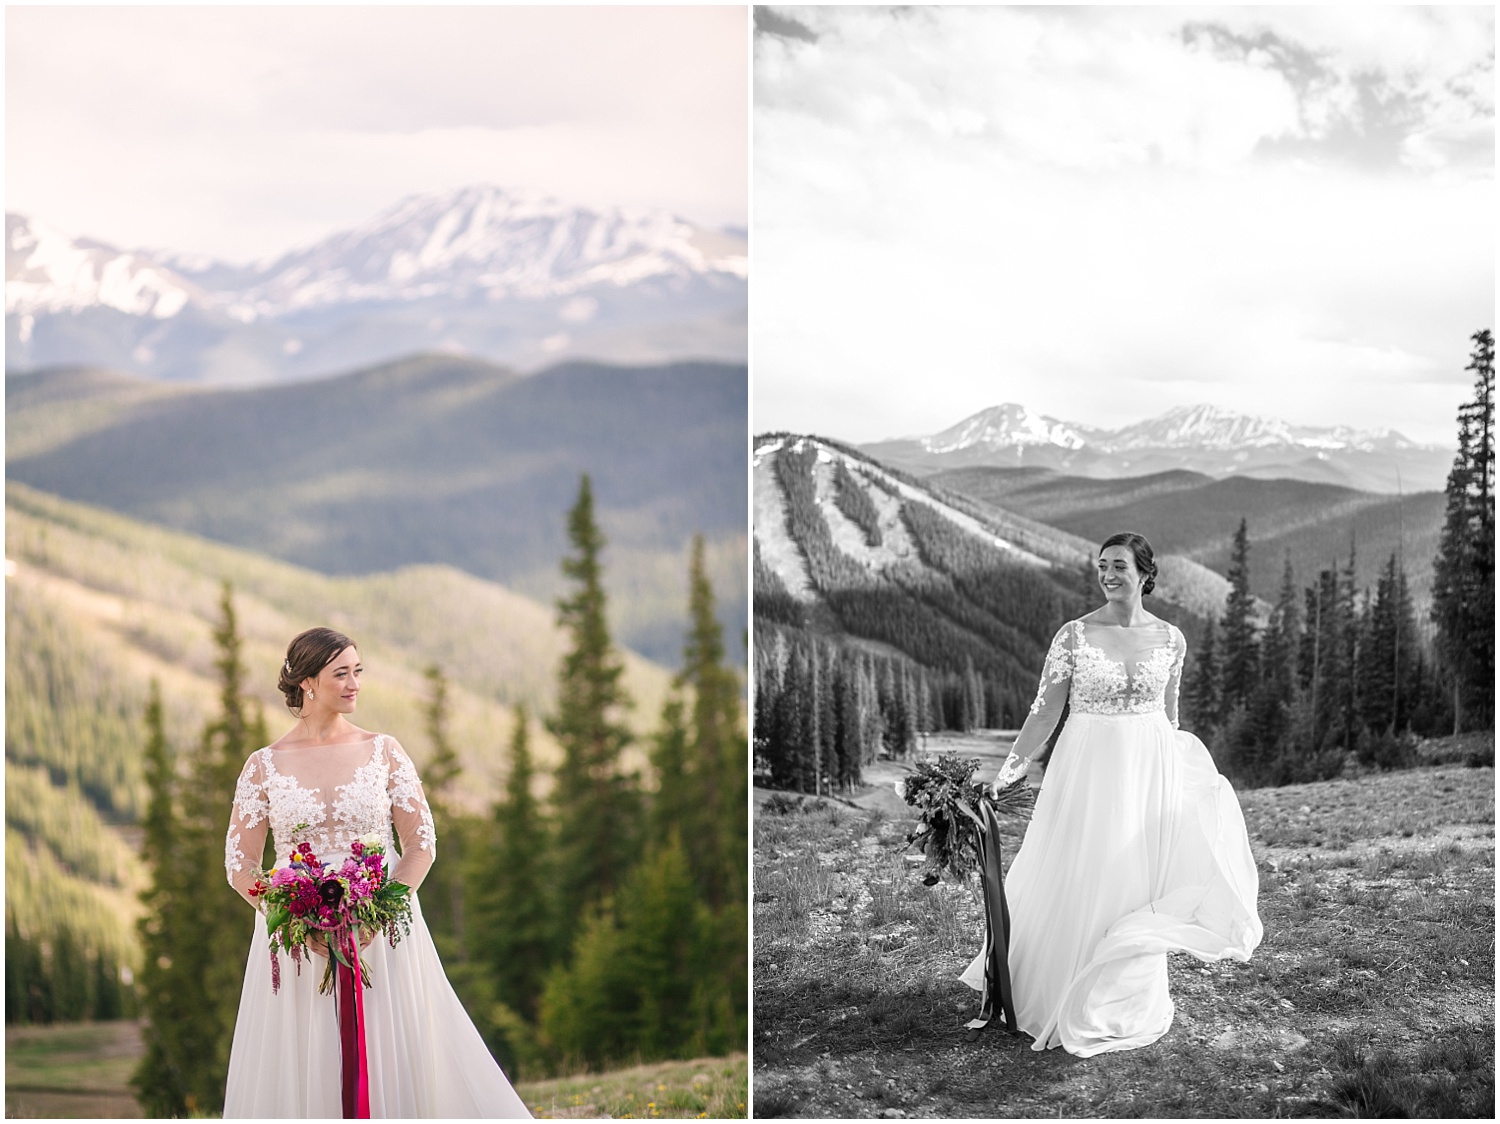 Bridal portraits at summit of Keystone Colorado for Ski Tip Lodge wedding